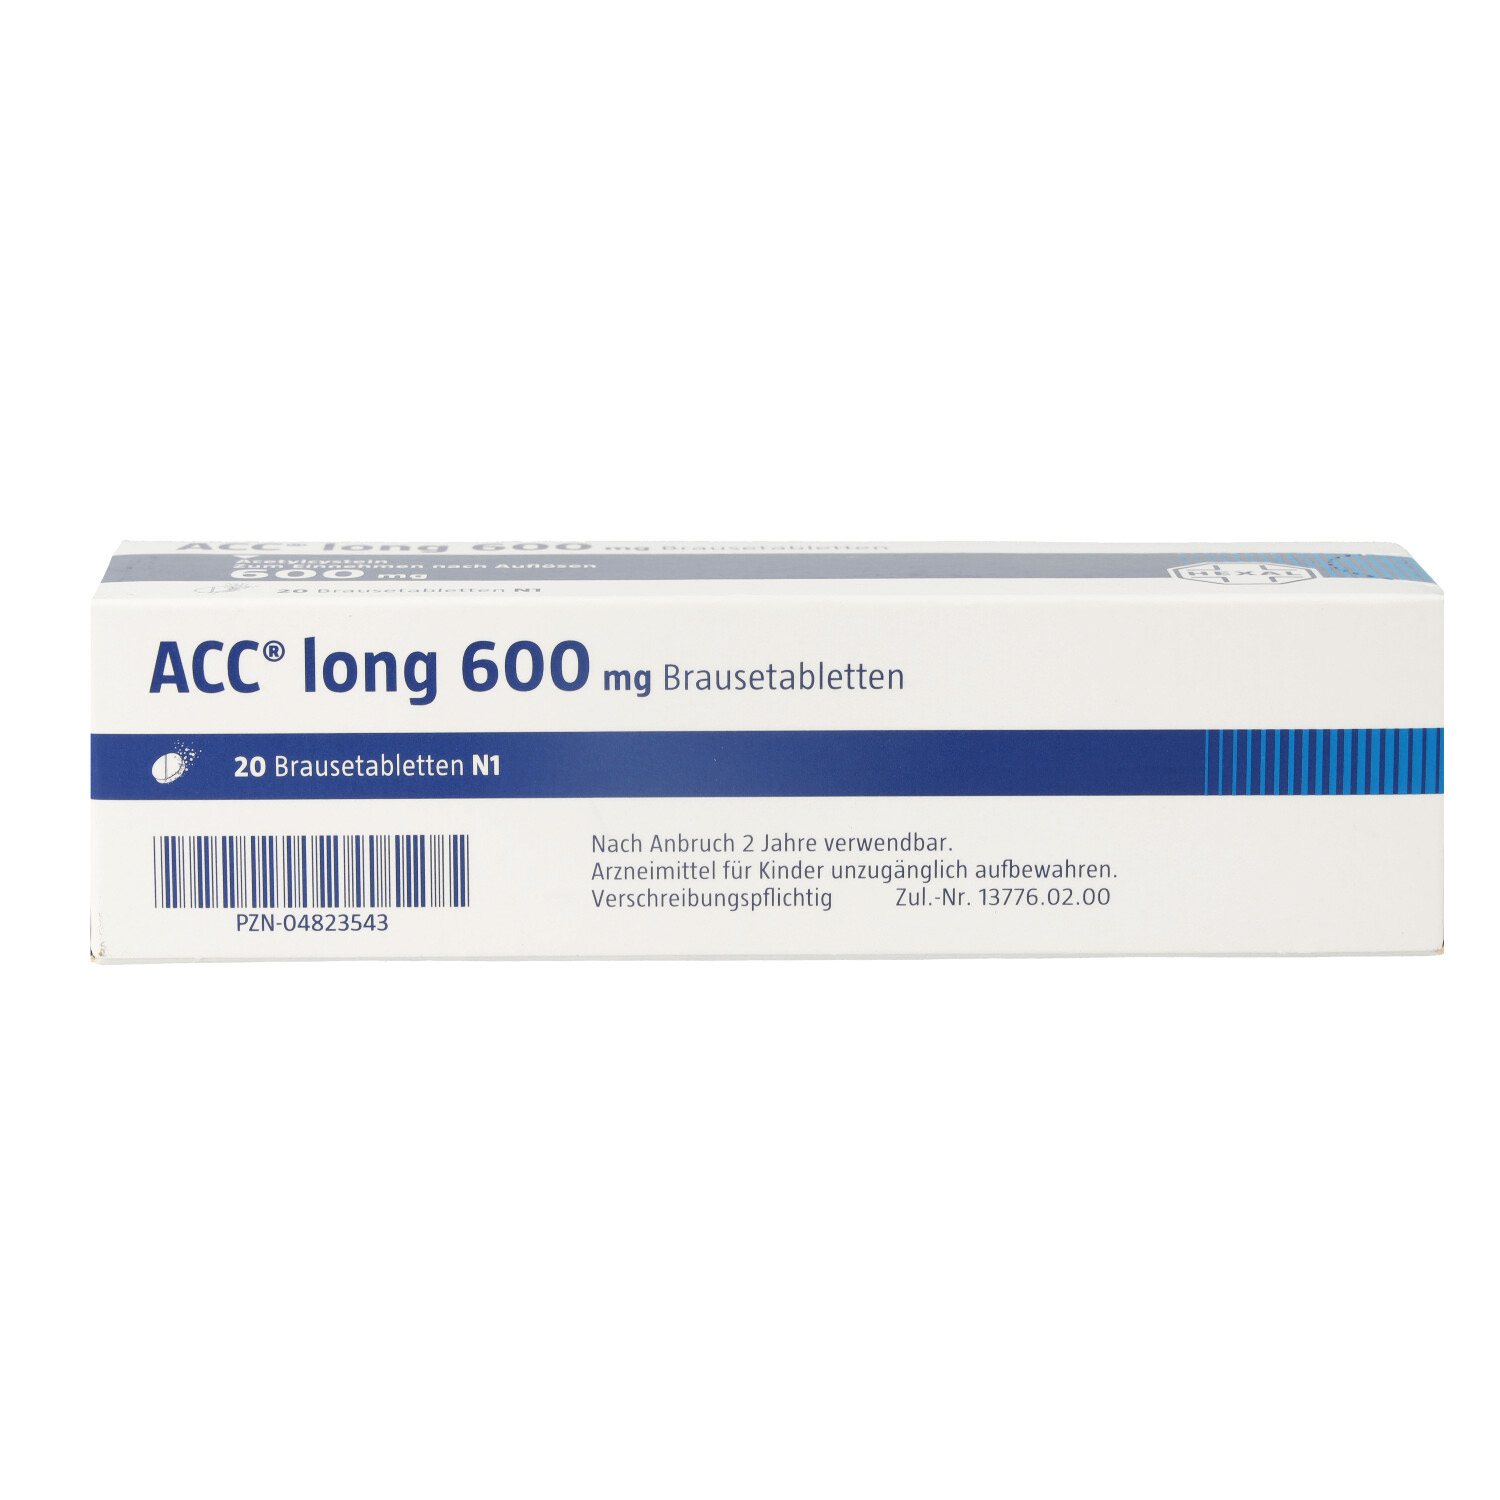 ACC long 600 mg Brausetabletten